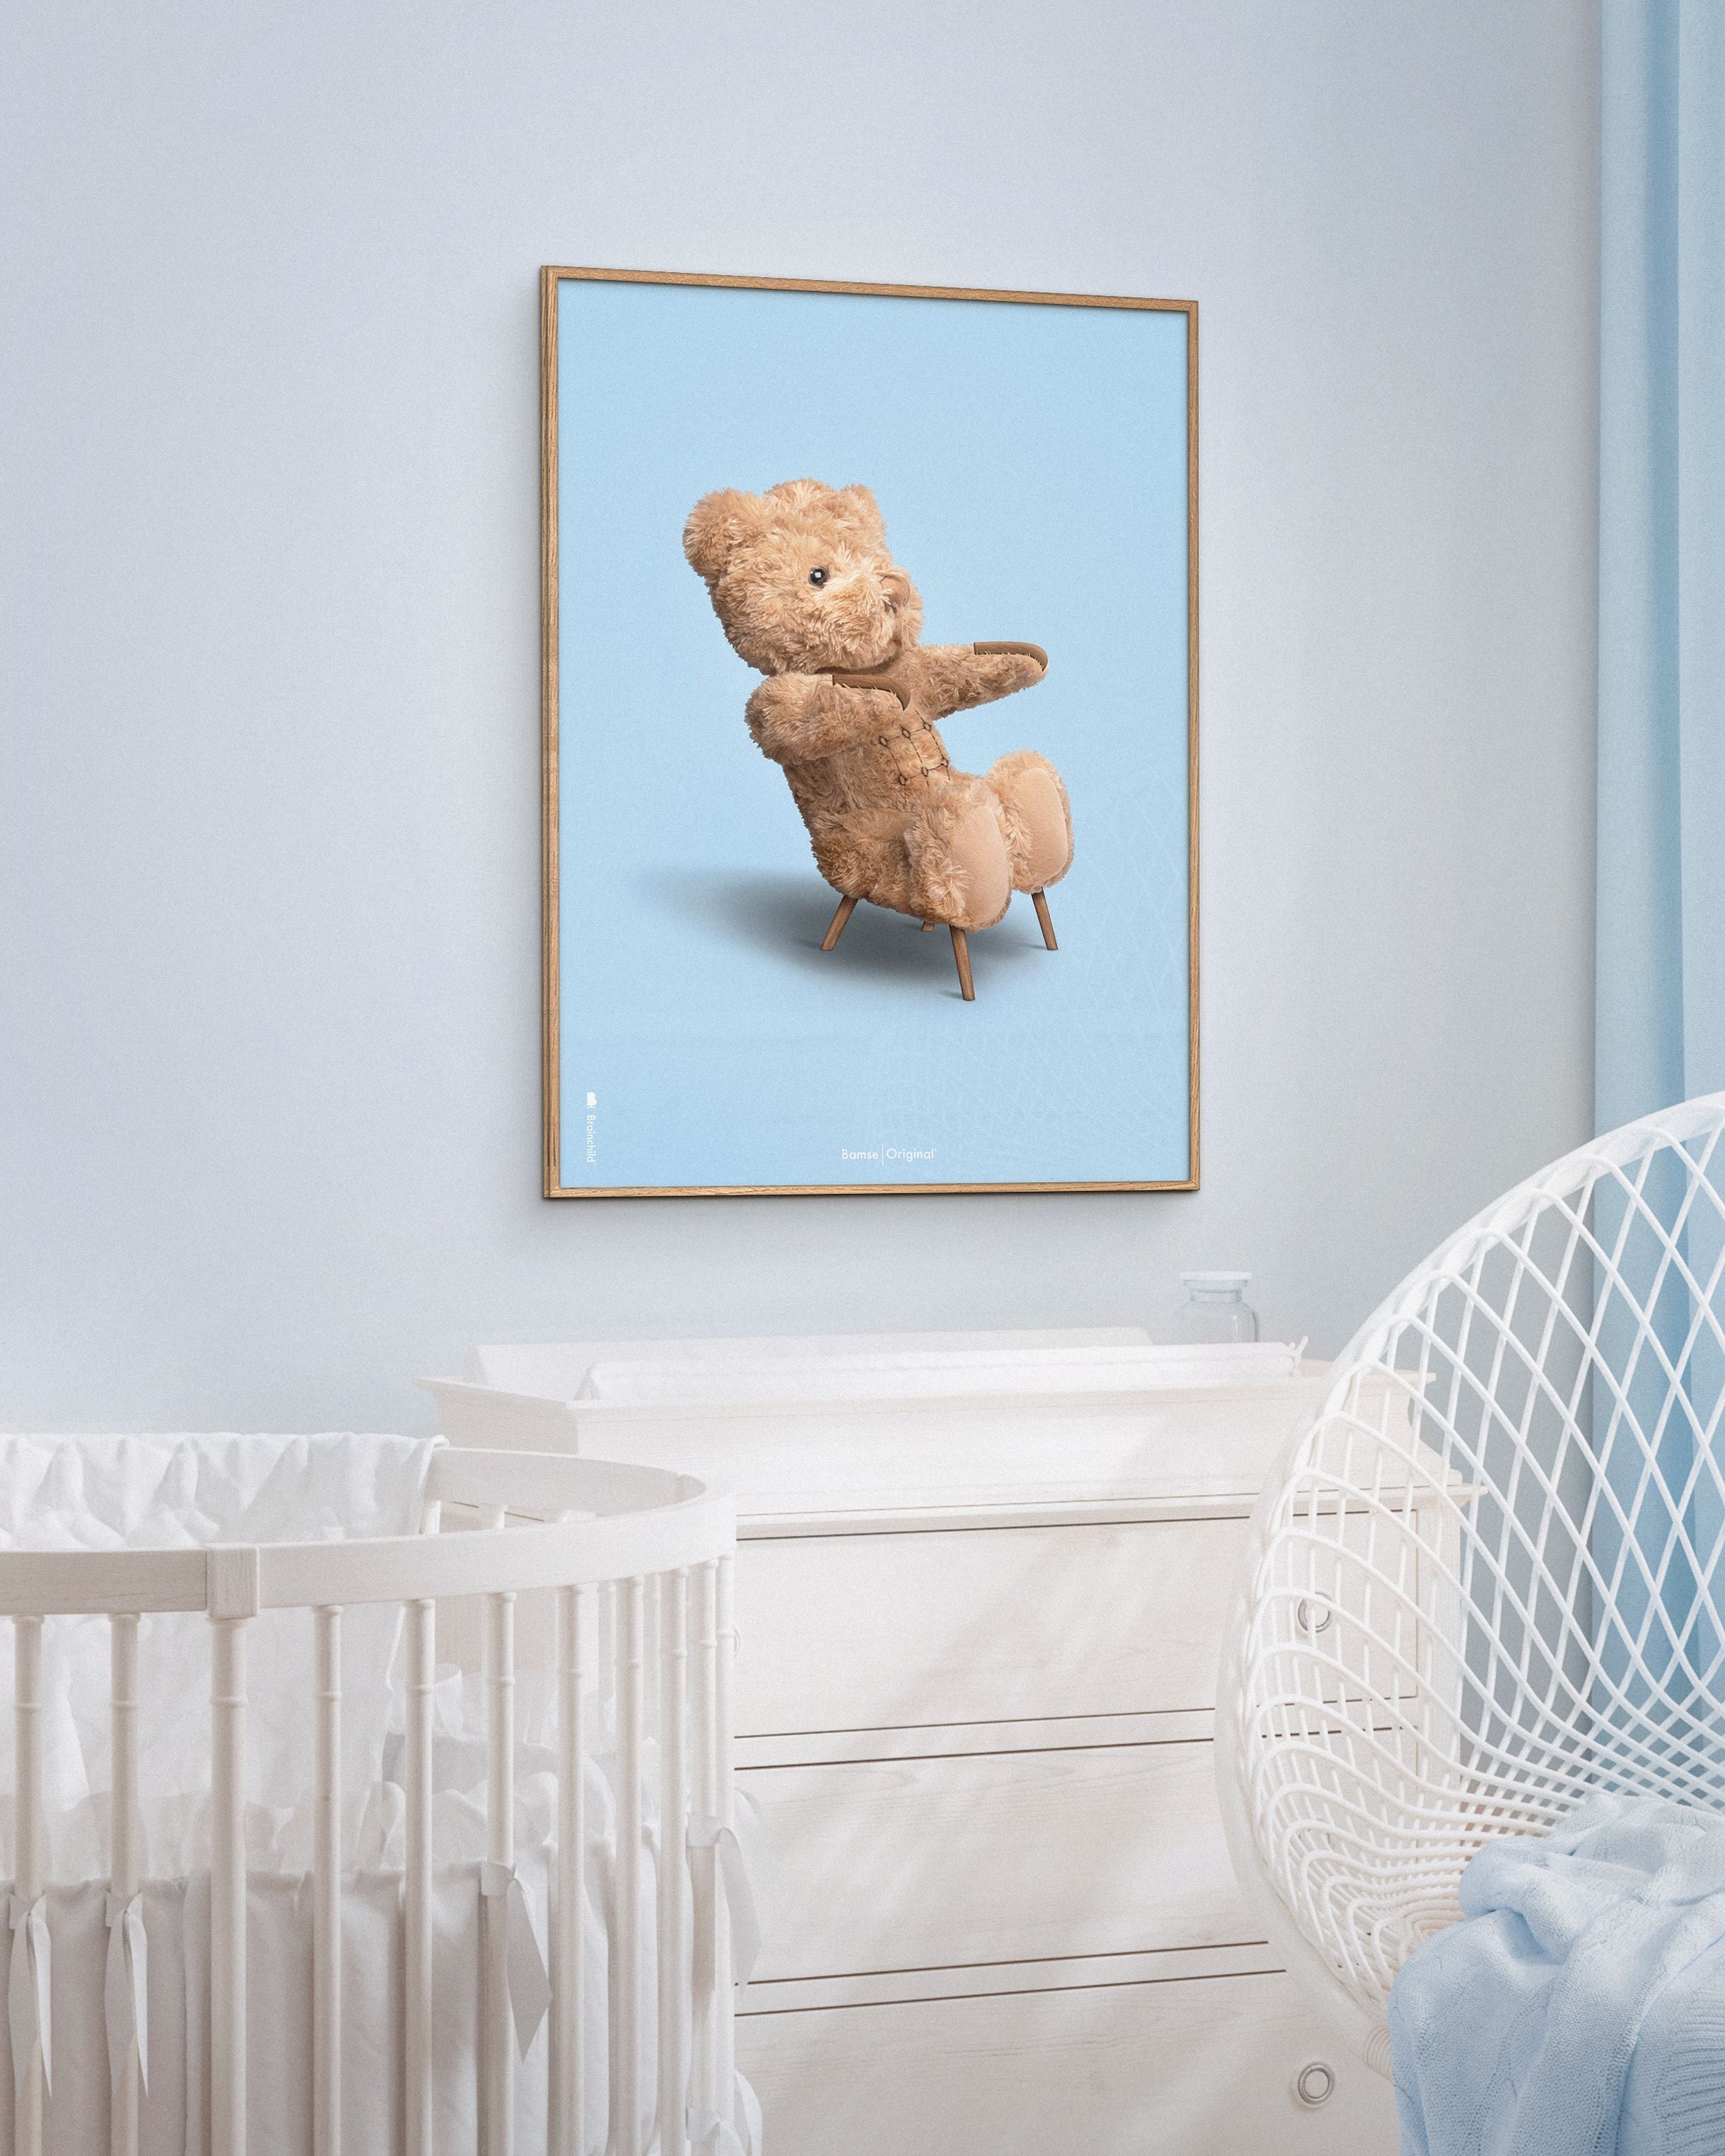 Brainchild Teddy Bear Classic Poster Brass farvet ramme A5, lyseblå baggrund